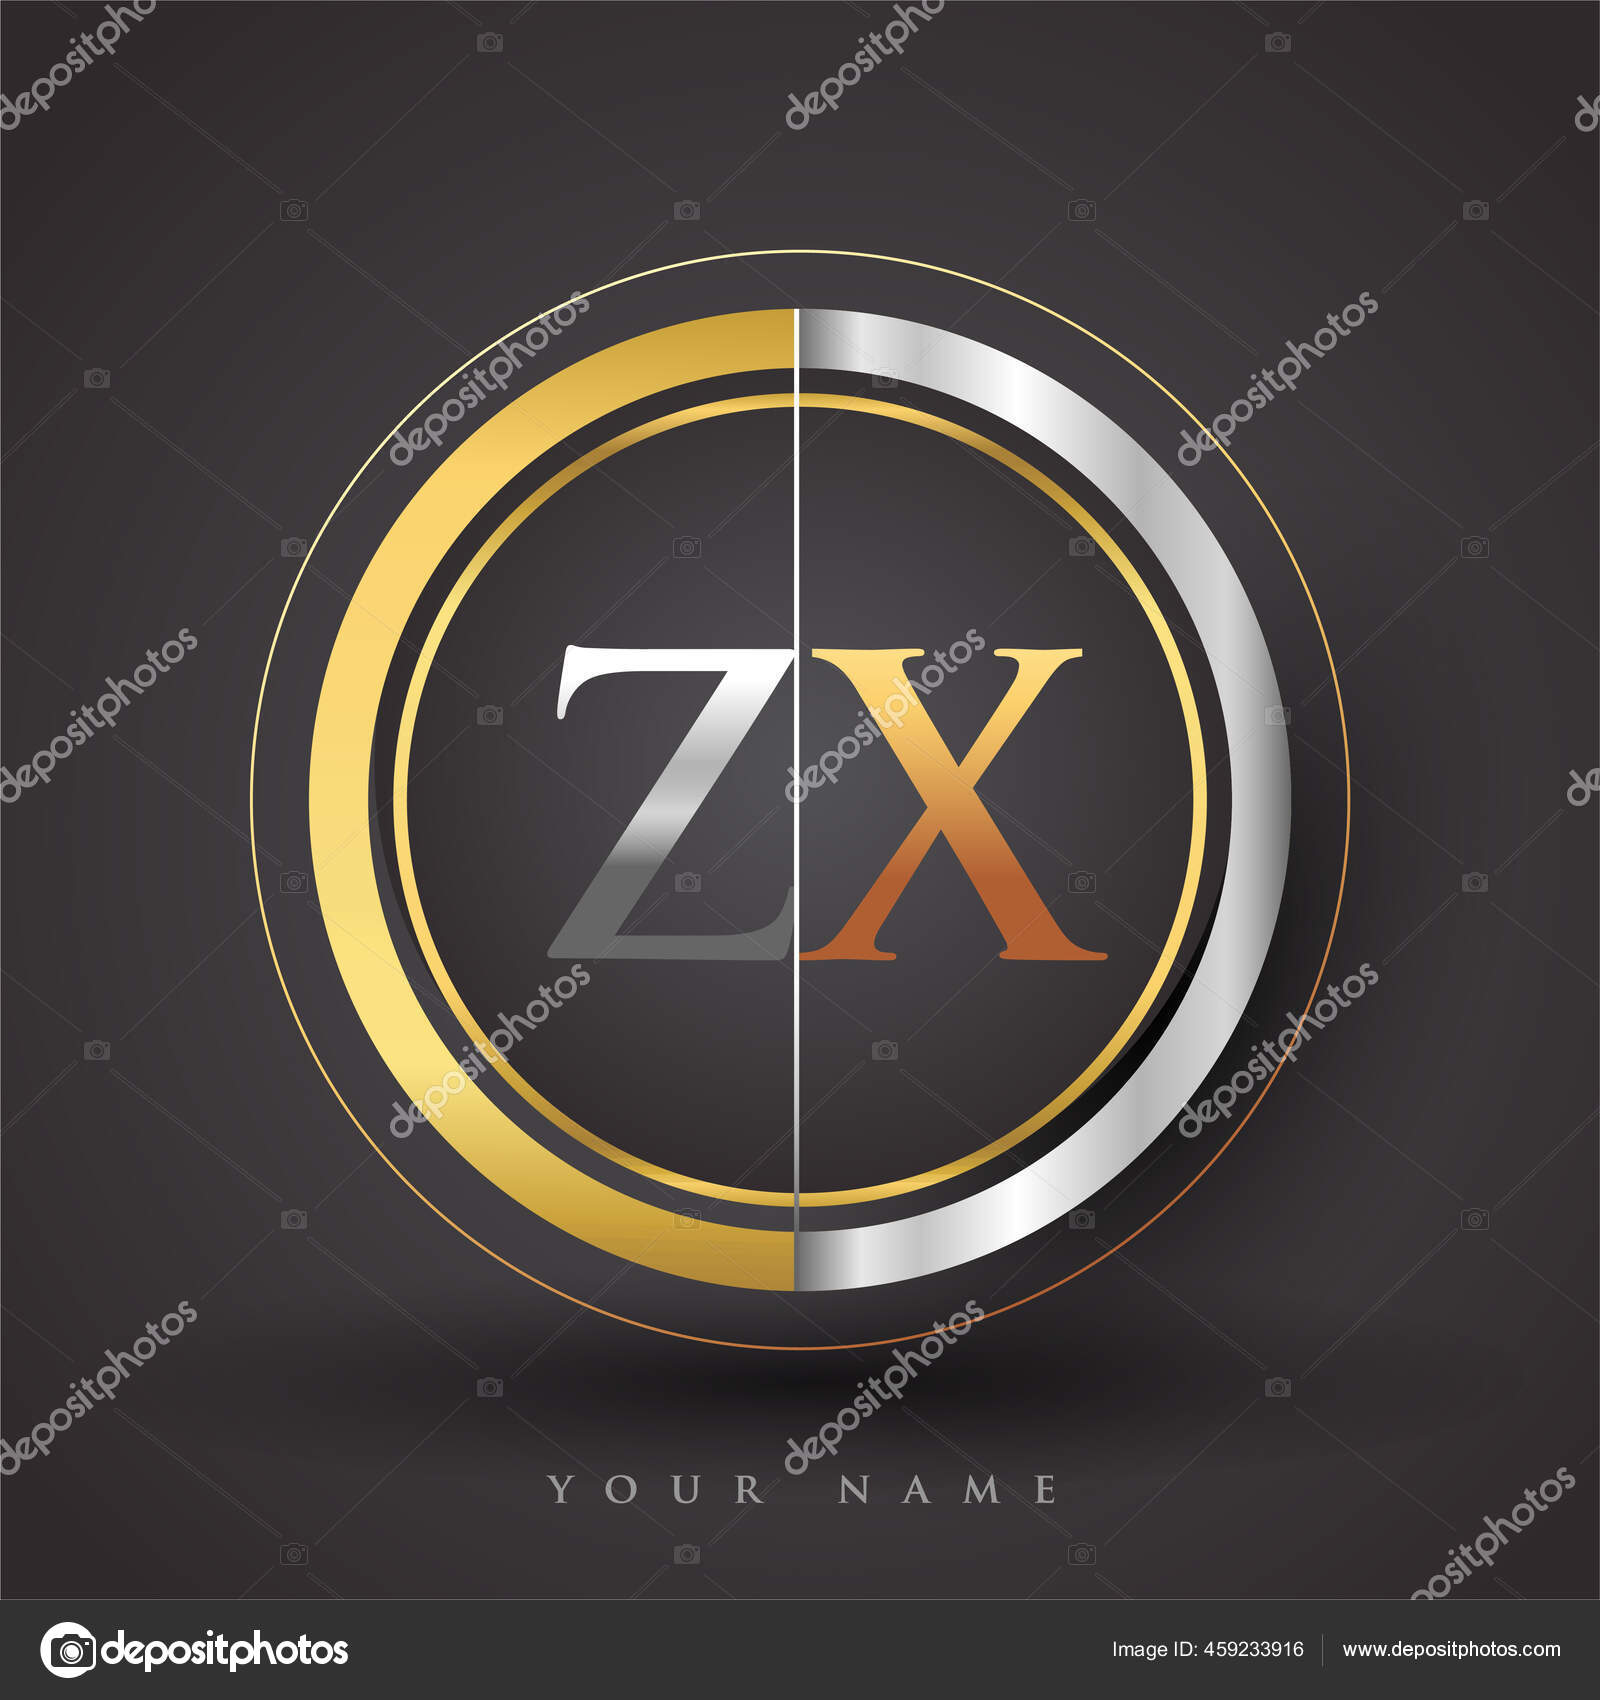 Zx Vector Art Stock Images | Depositphotos